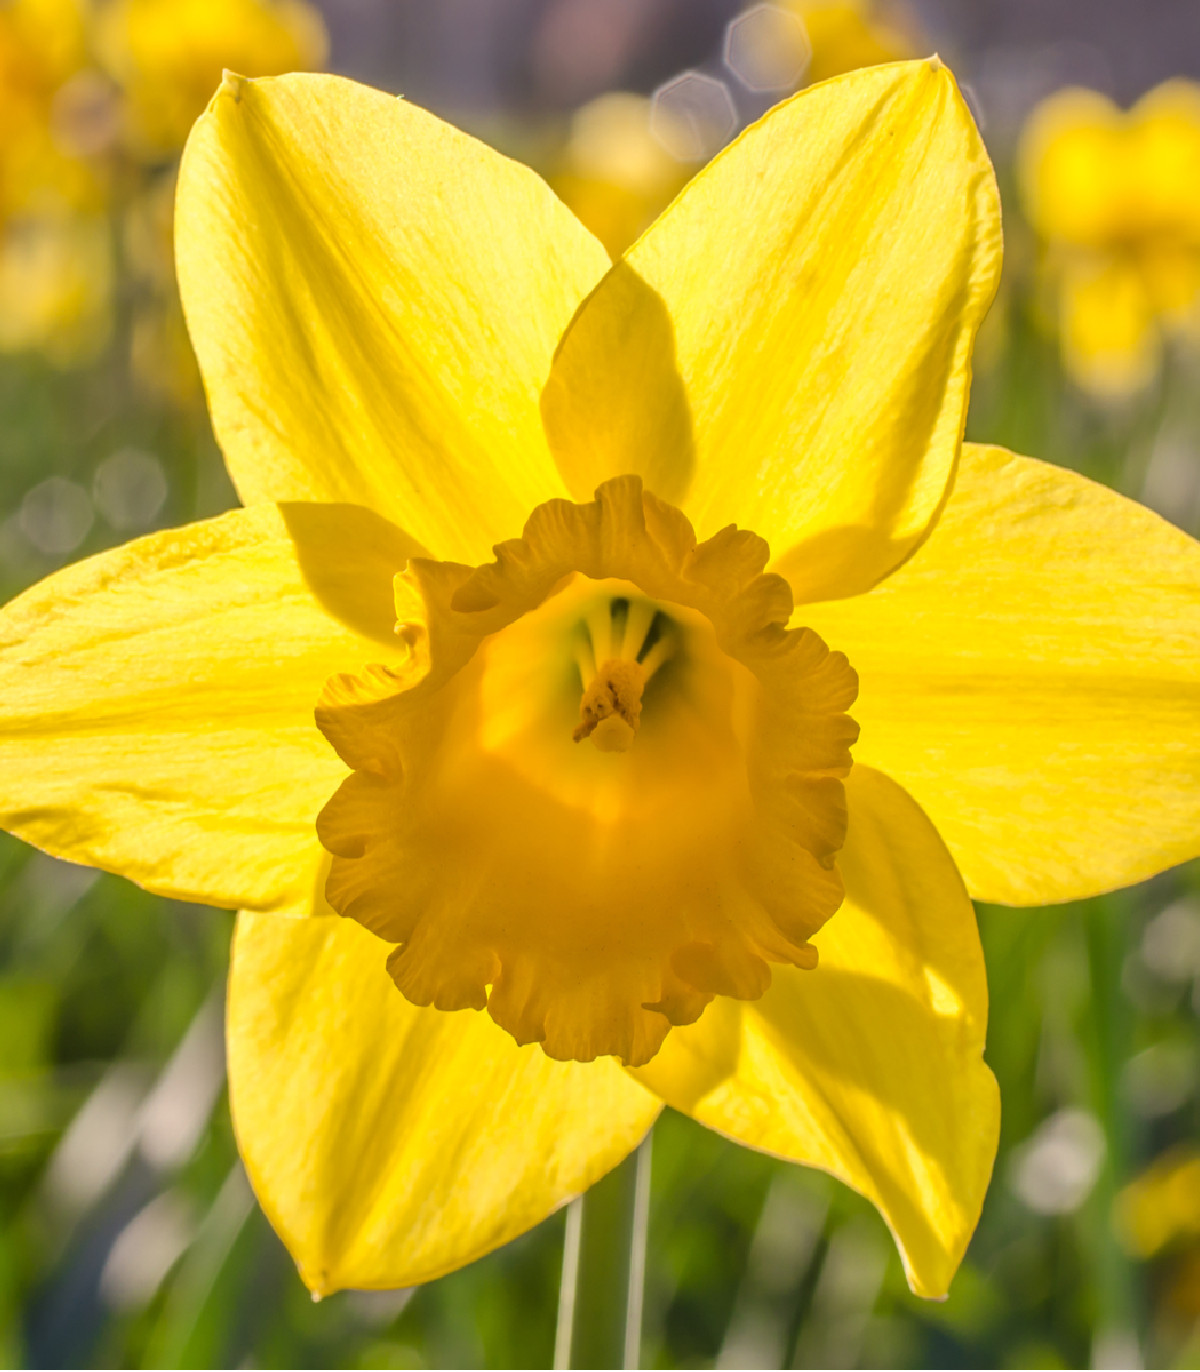 Narcis Dutch master - Narcissus - cibuľoviny - 3 ks